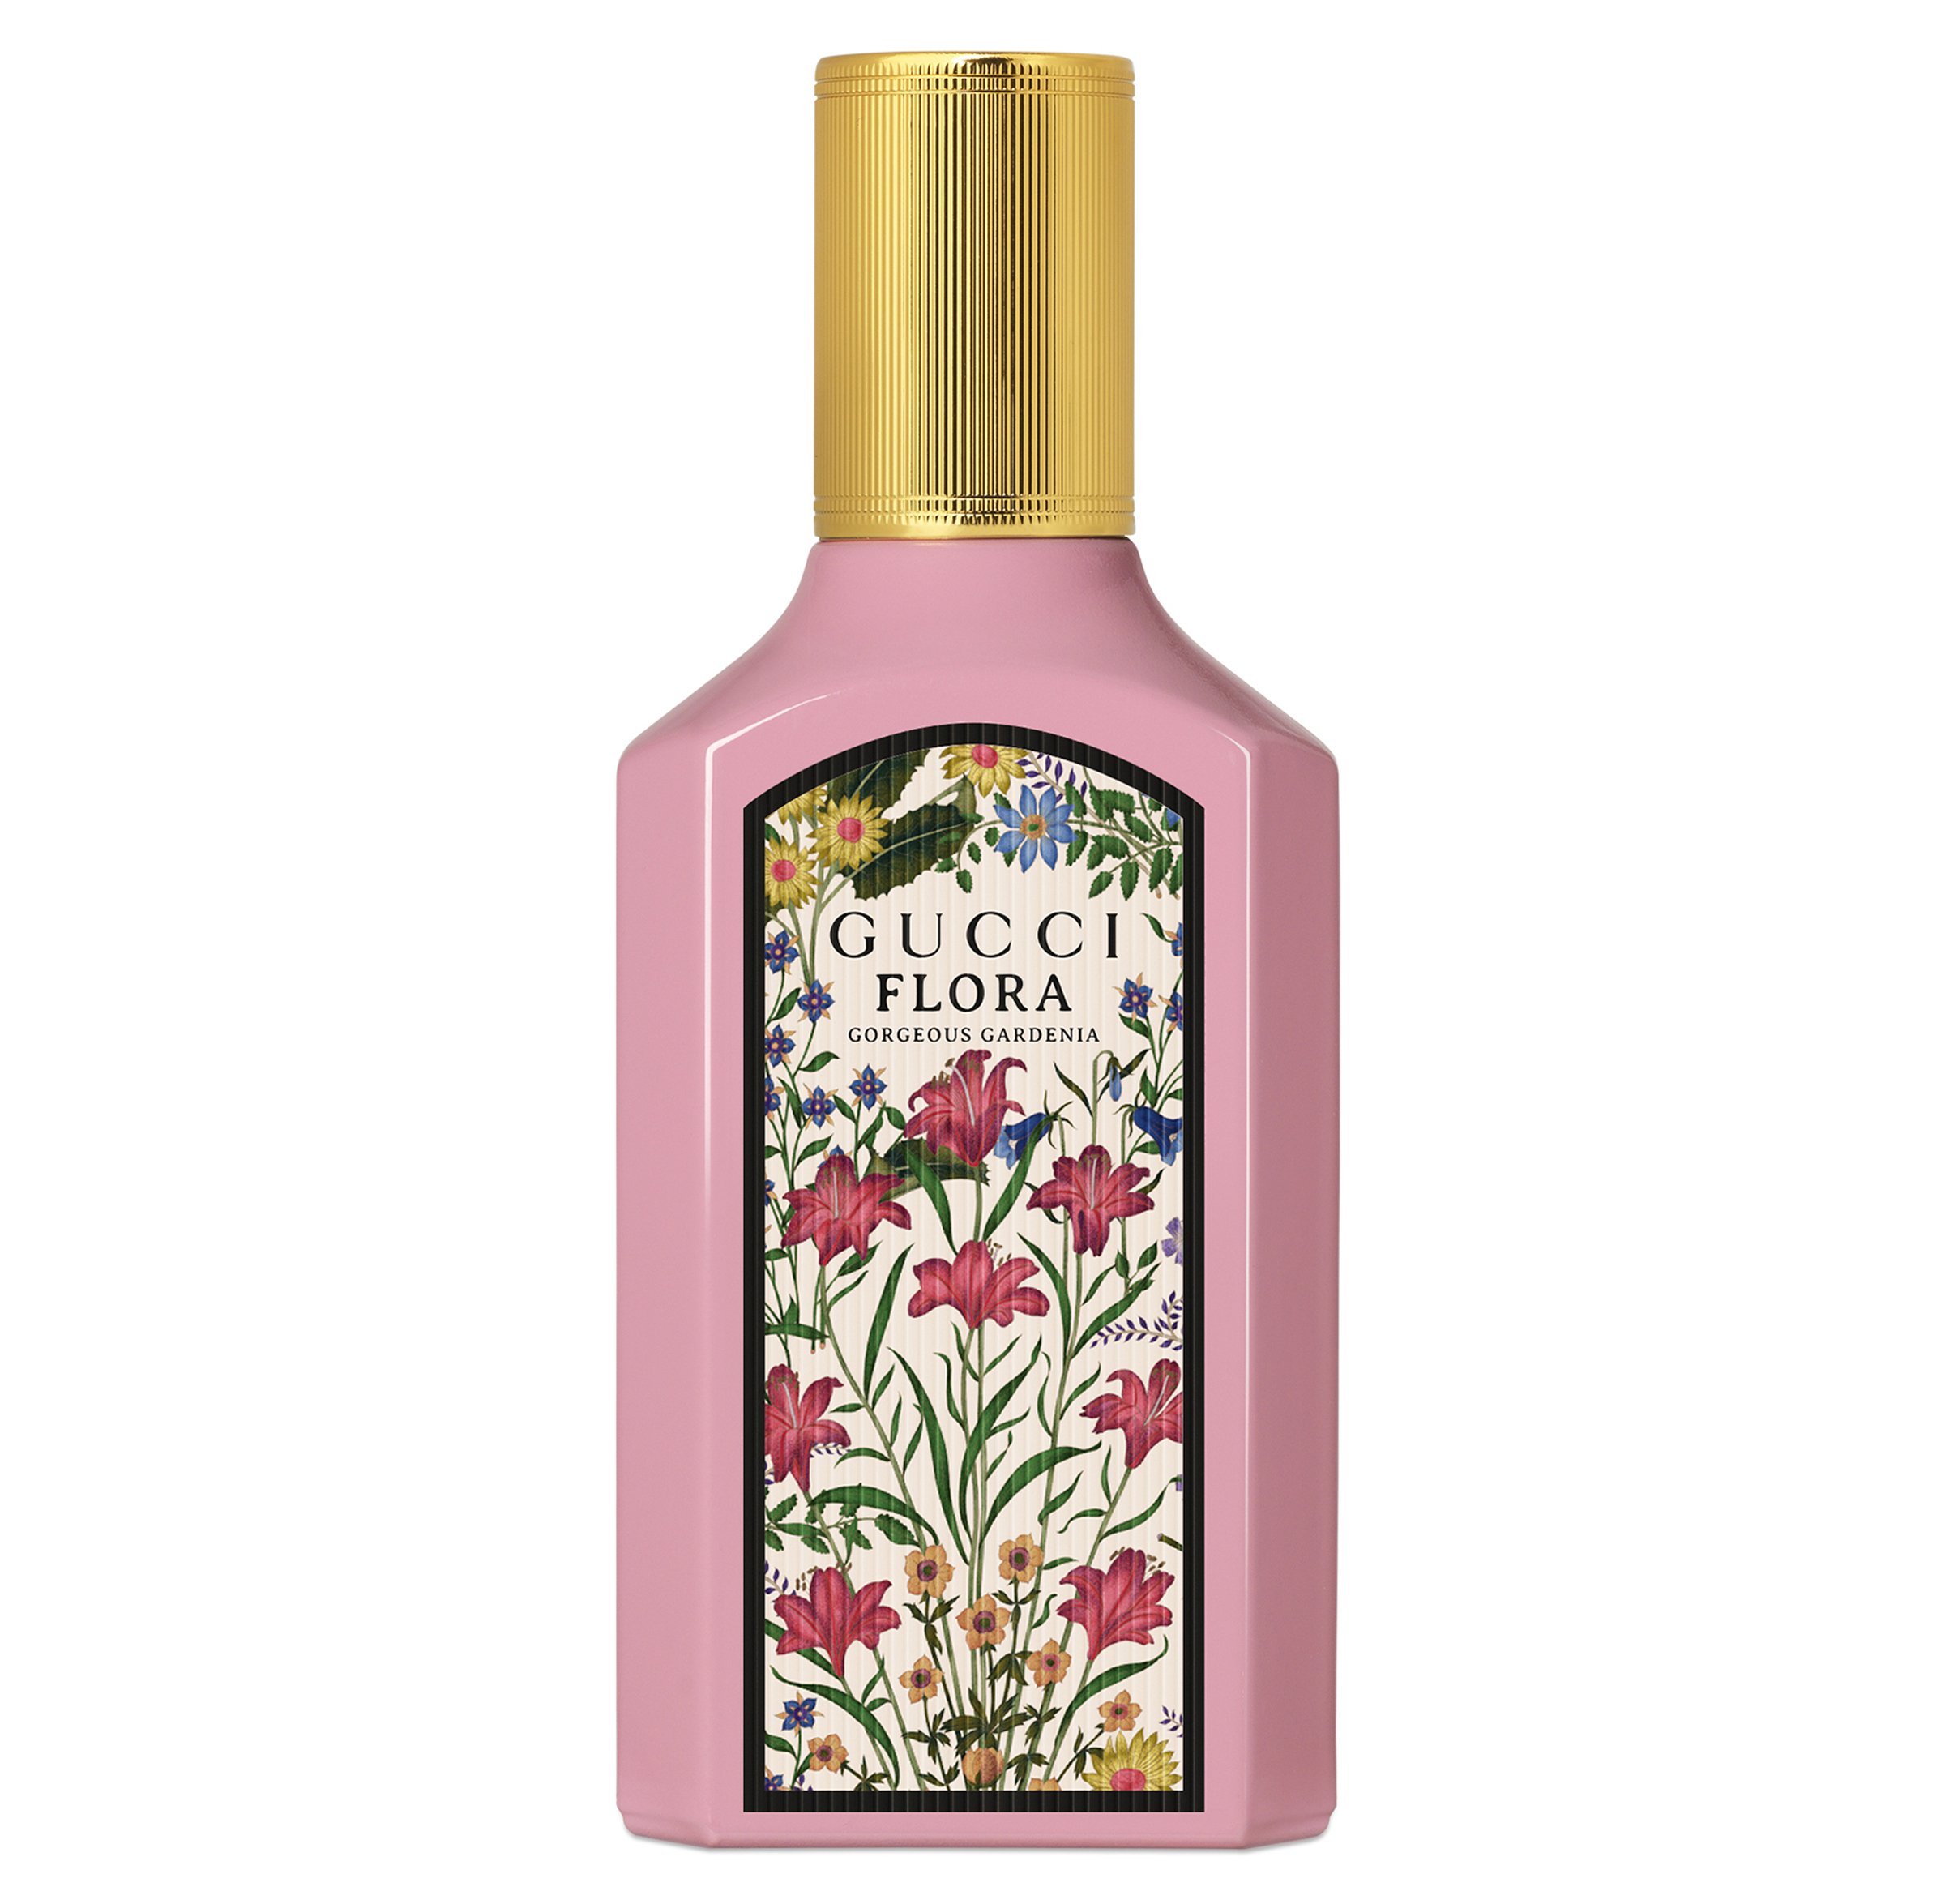 3. Gucci Flora Gorgeous Gardenia Eau de Parfum Spray €100 for 50ml